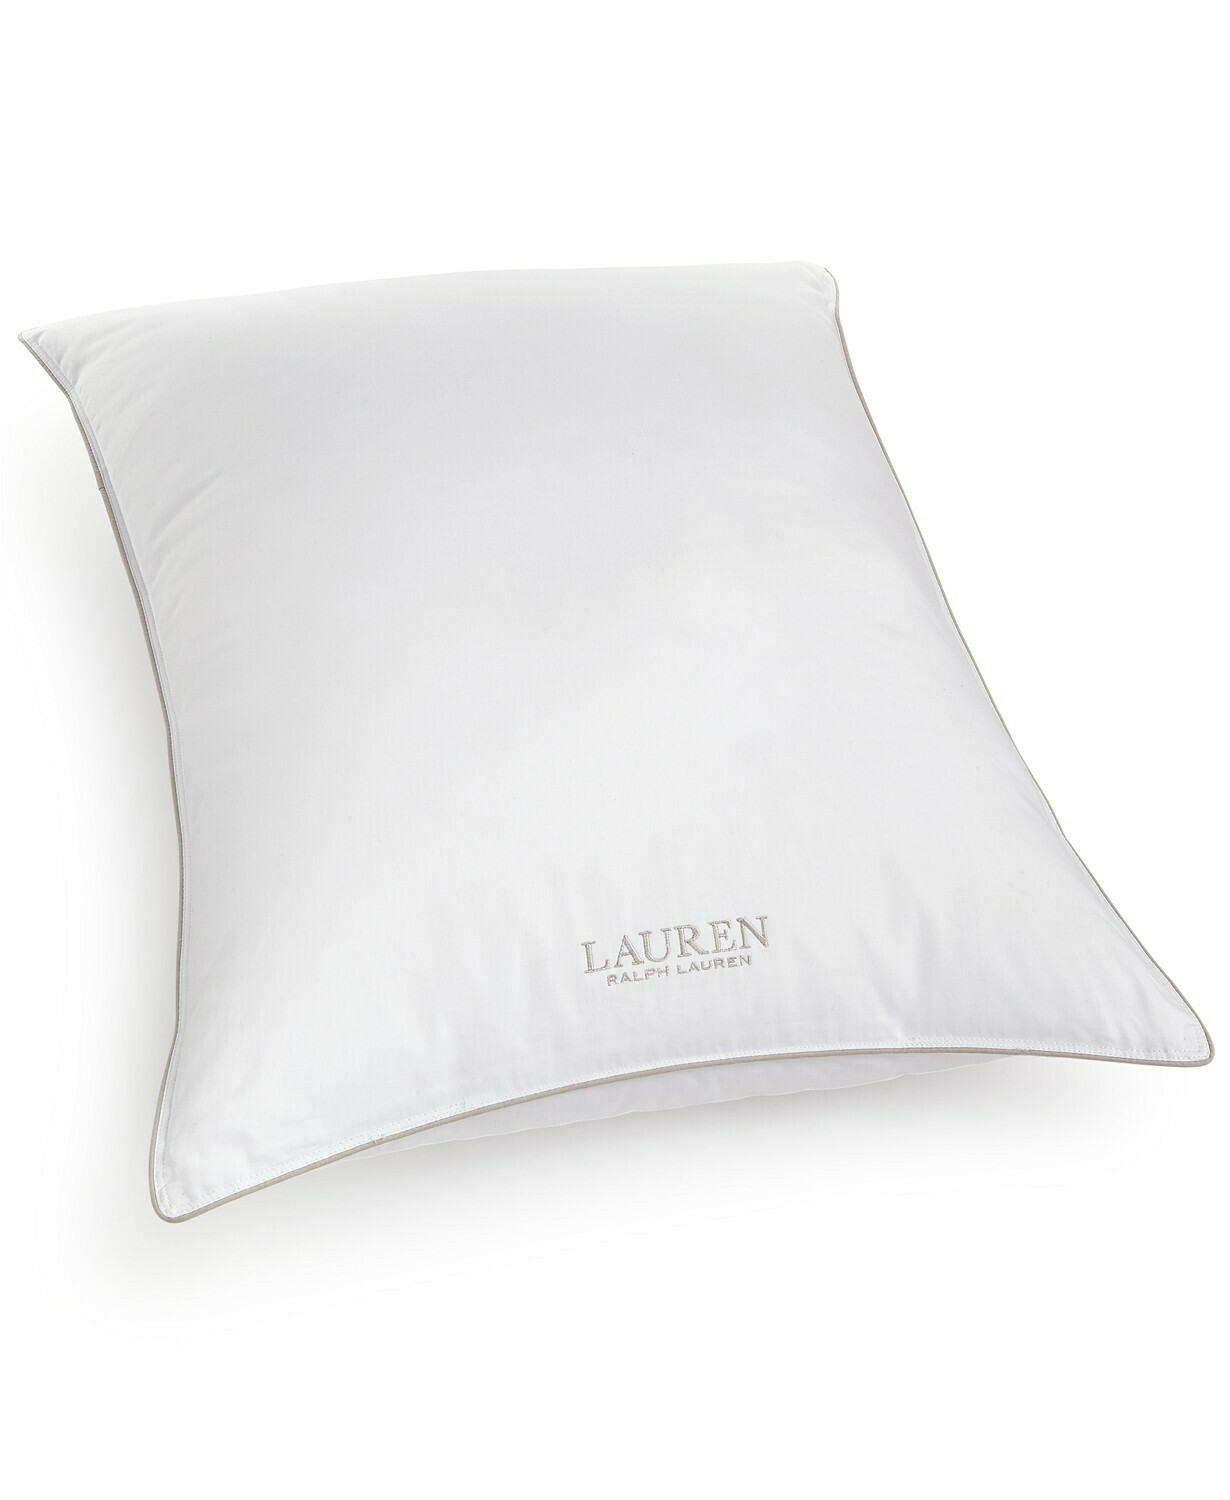 Lauren Ralph Lauren Lux-Loft Firm Density Down Alternative Standard/Queen Pillow